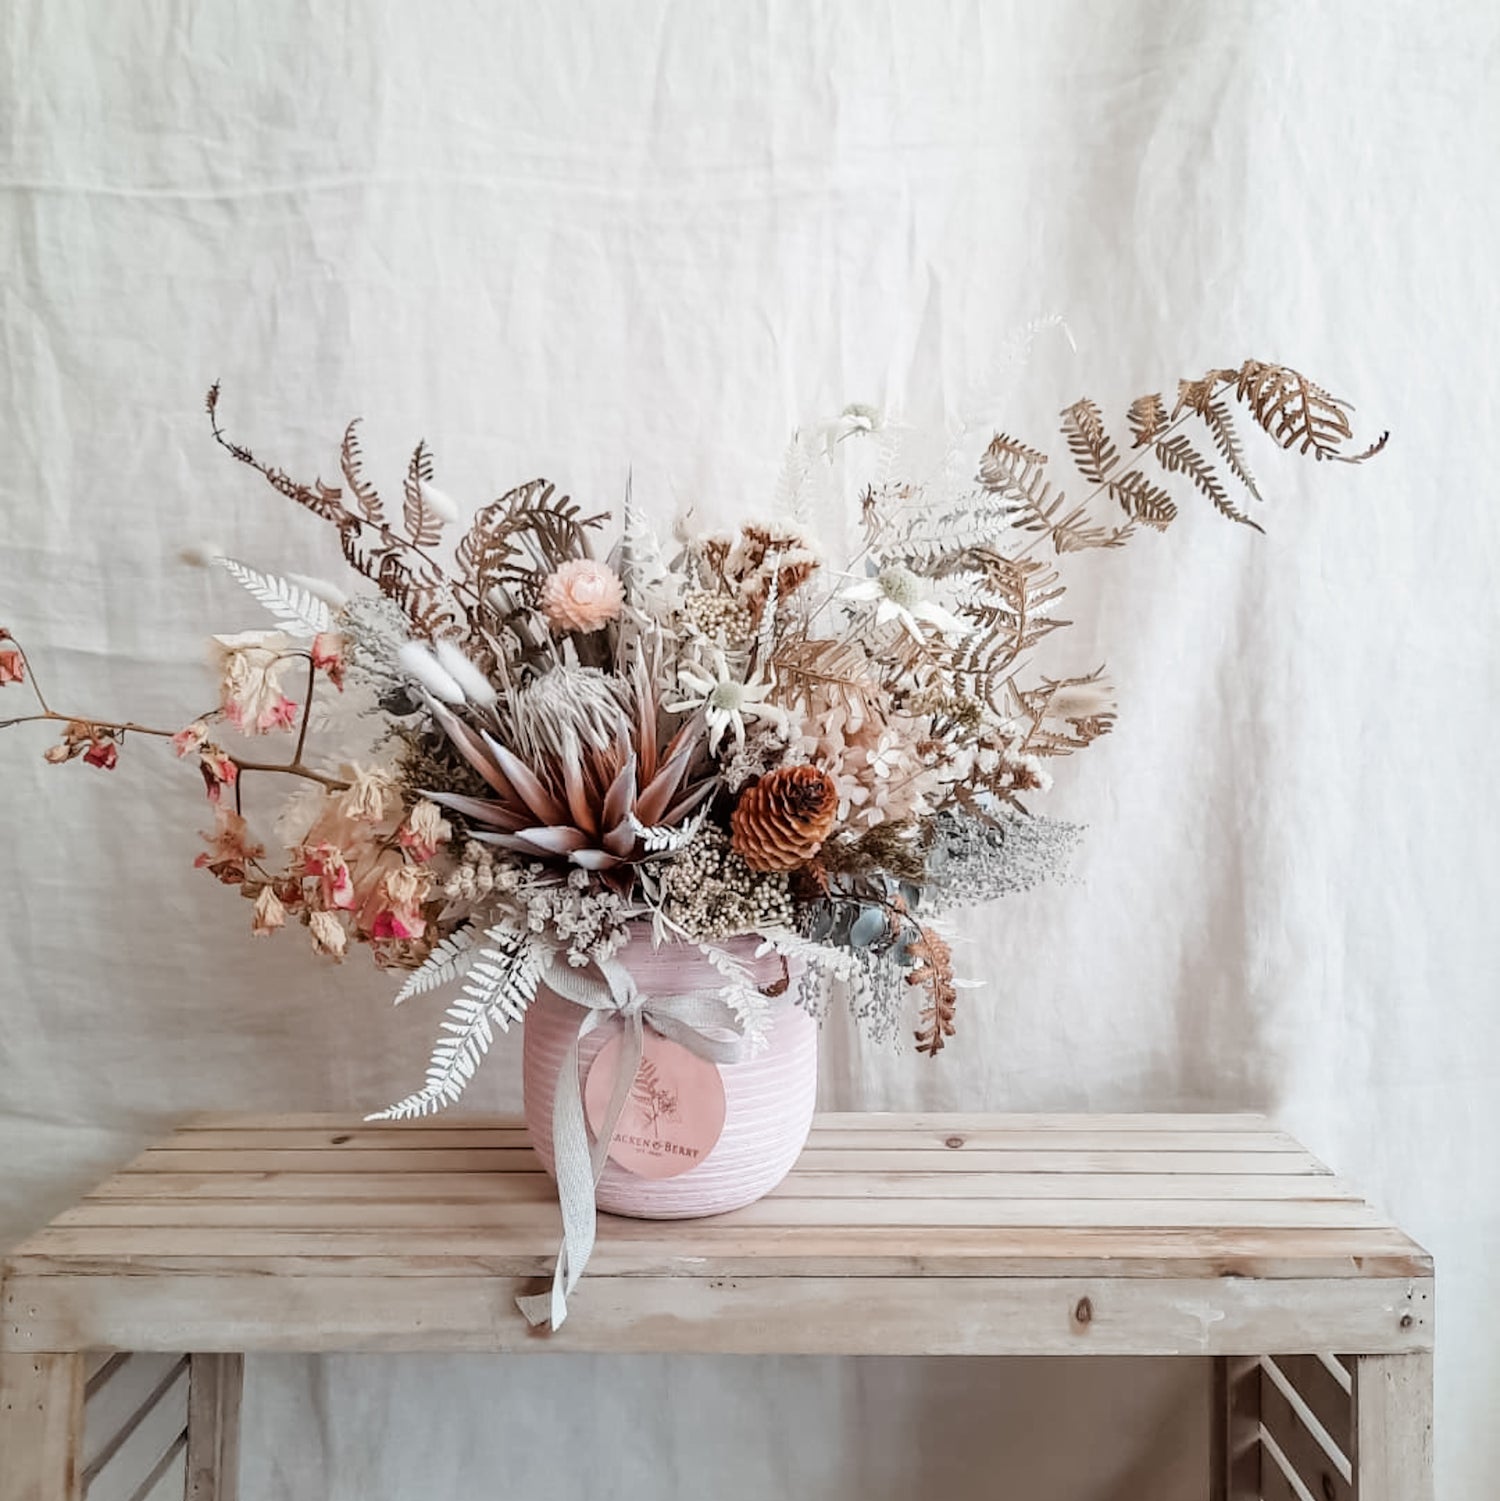 Dried flower arrangement in pink vessel.